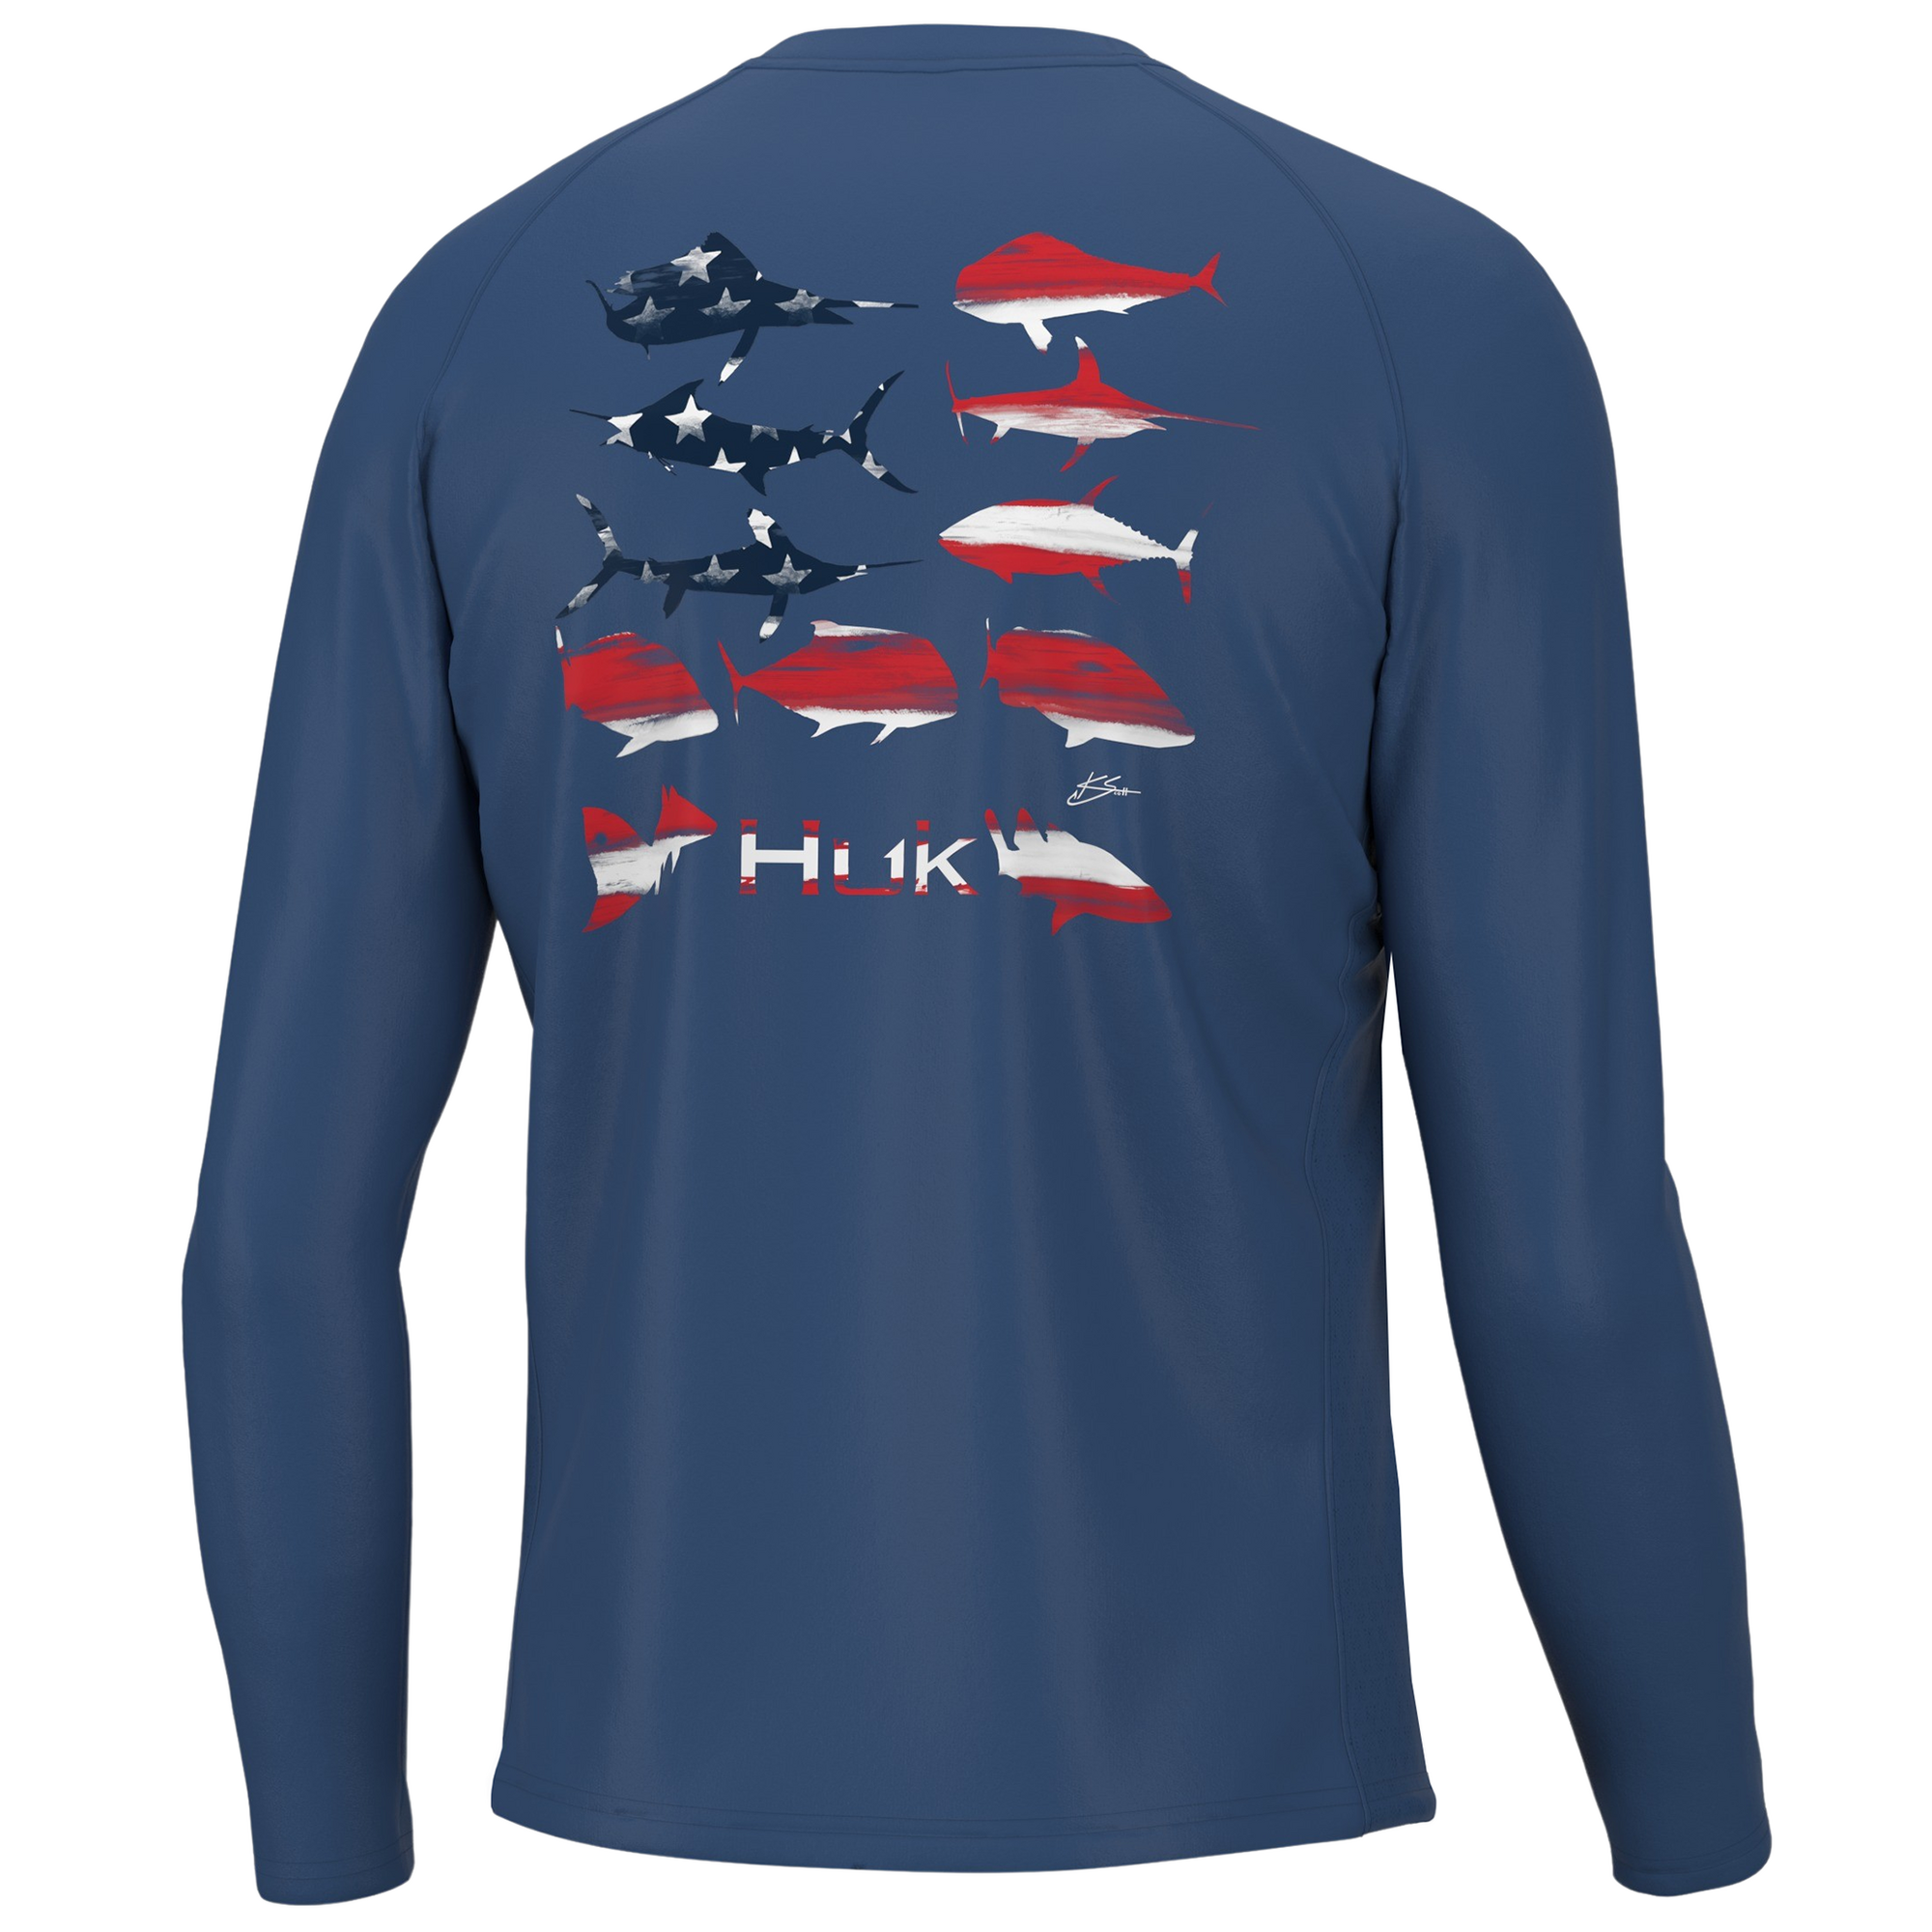 Huk Fishing Shirt, Men's Medium, Huk Pursuit Tuna Badge LS Shirt, Fishing,  NWT